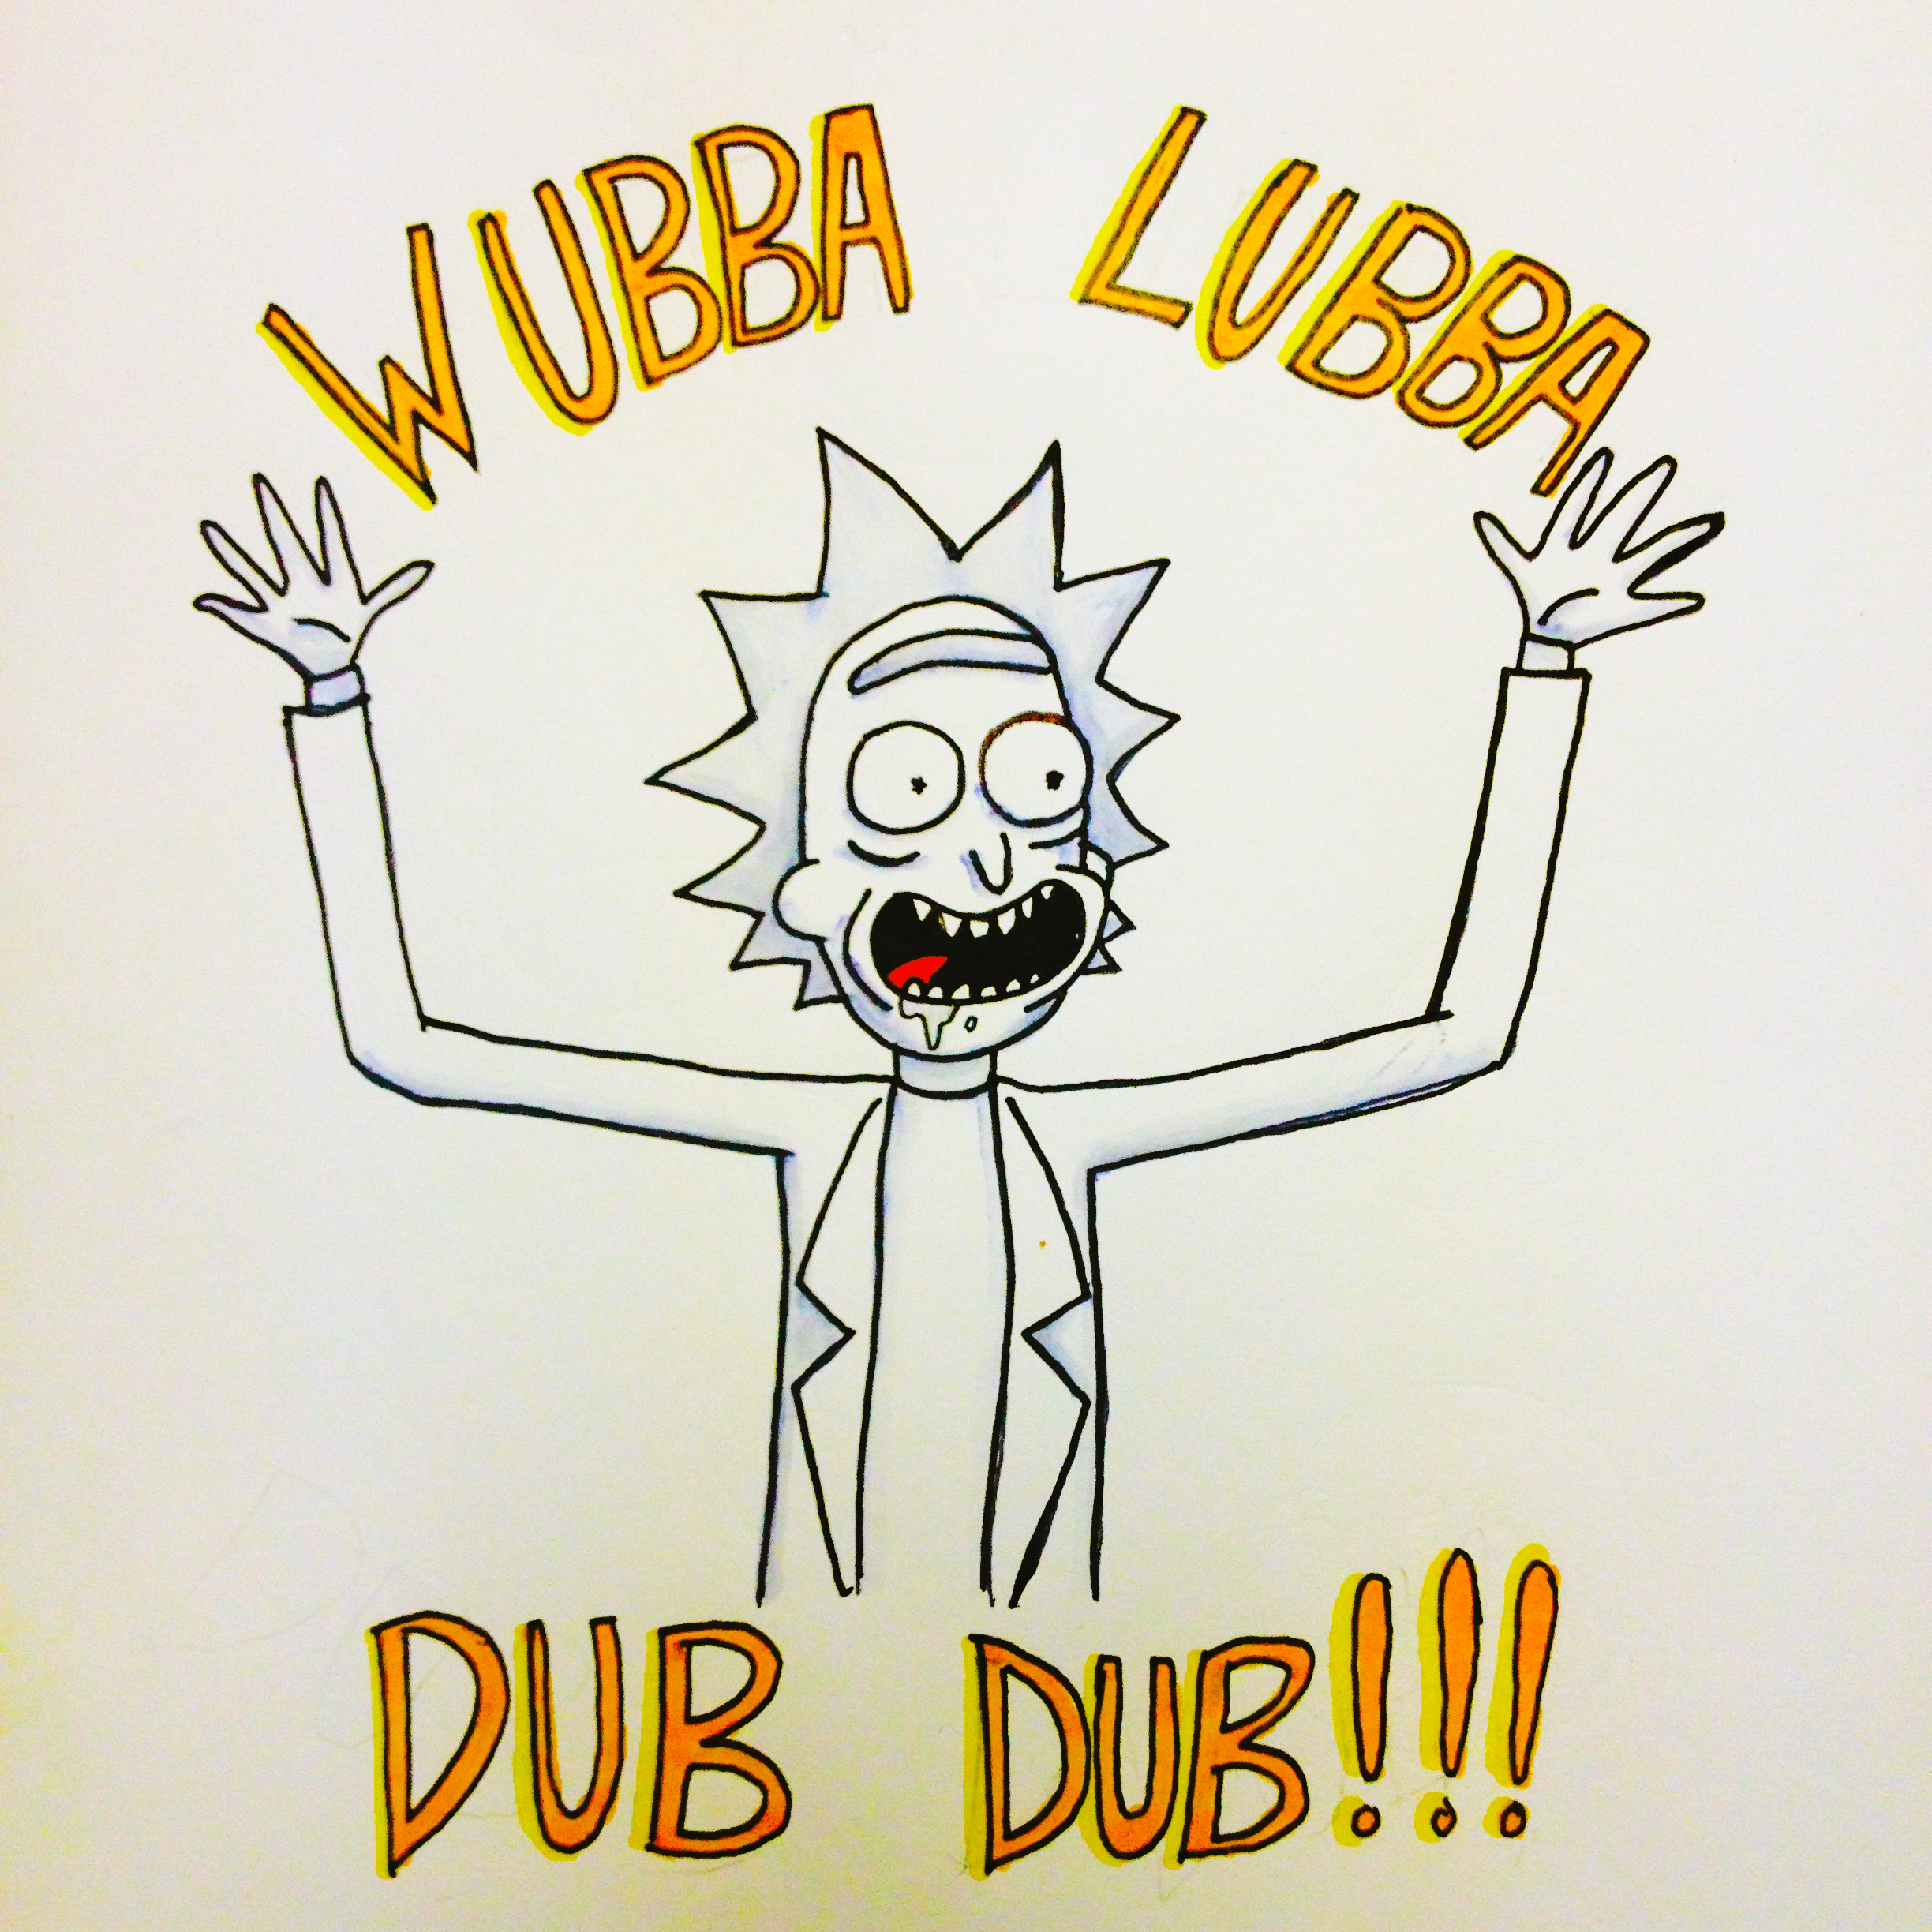 Rick Wubba Lubba Dub Dub